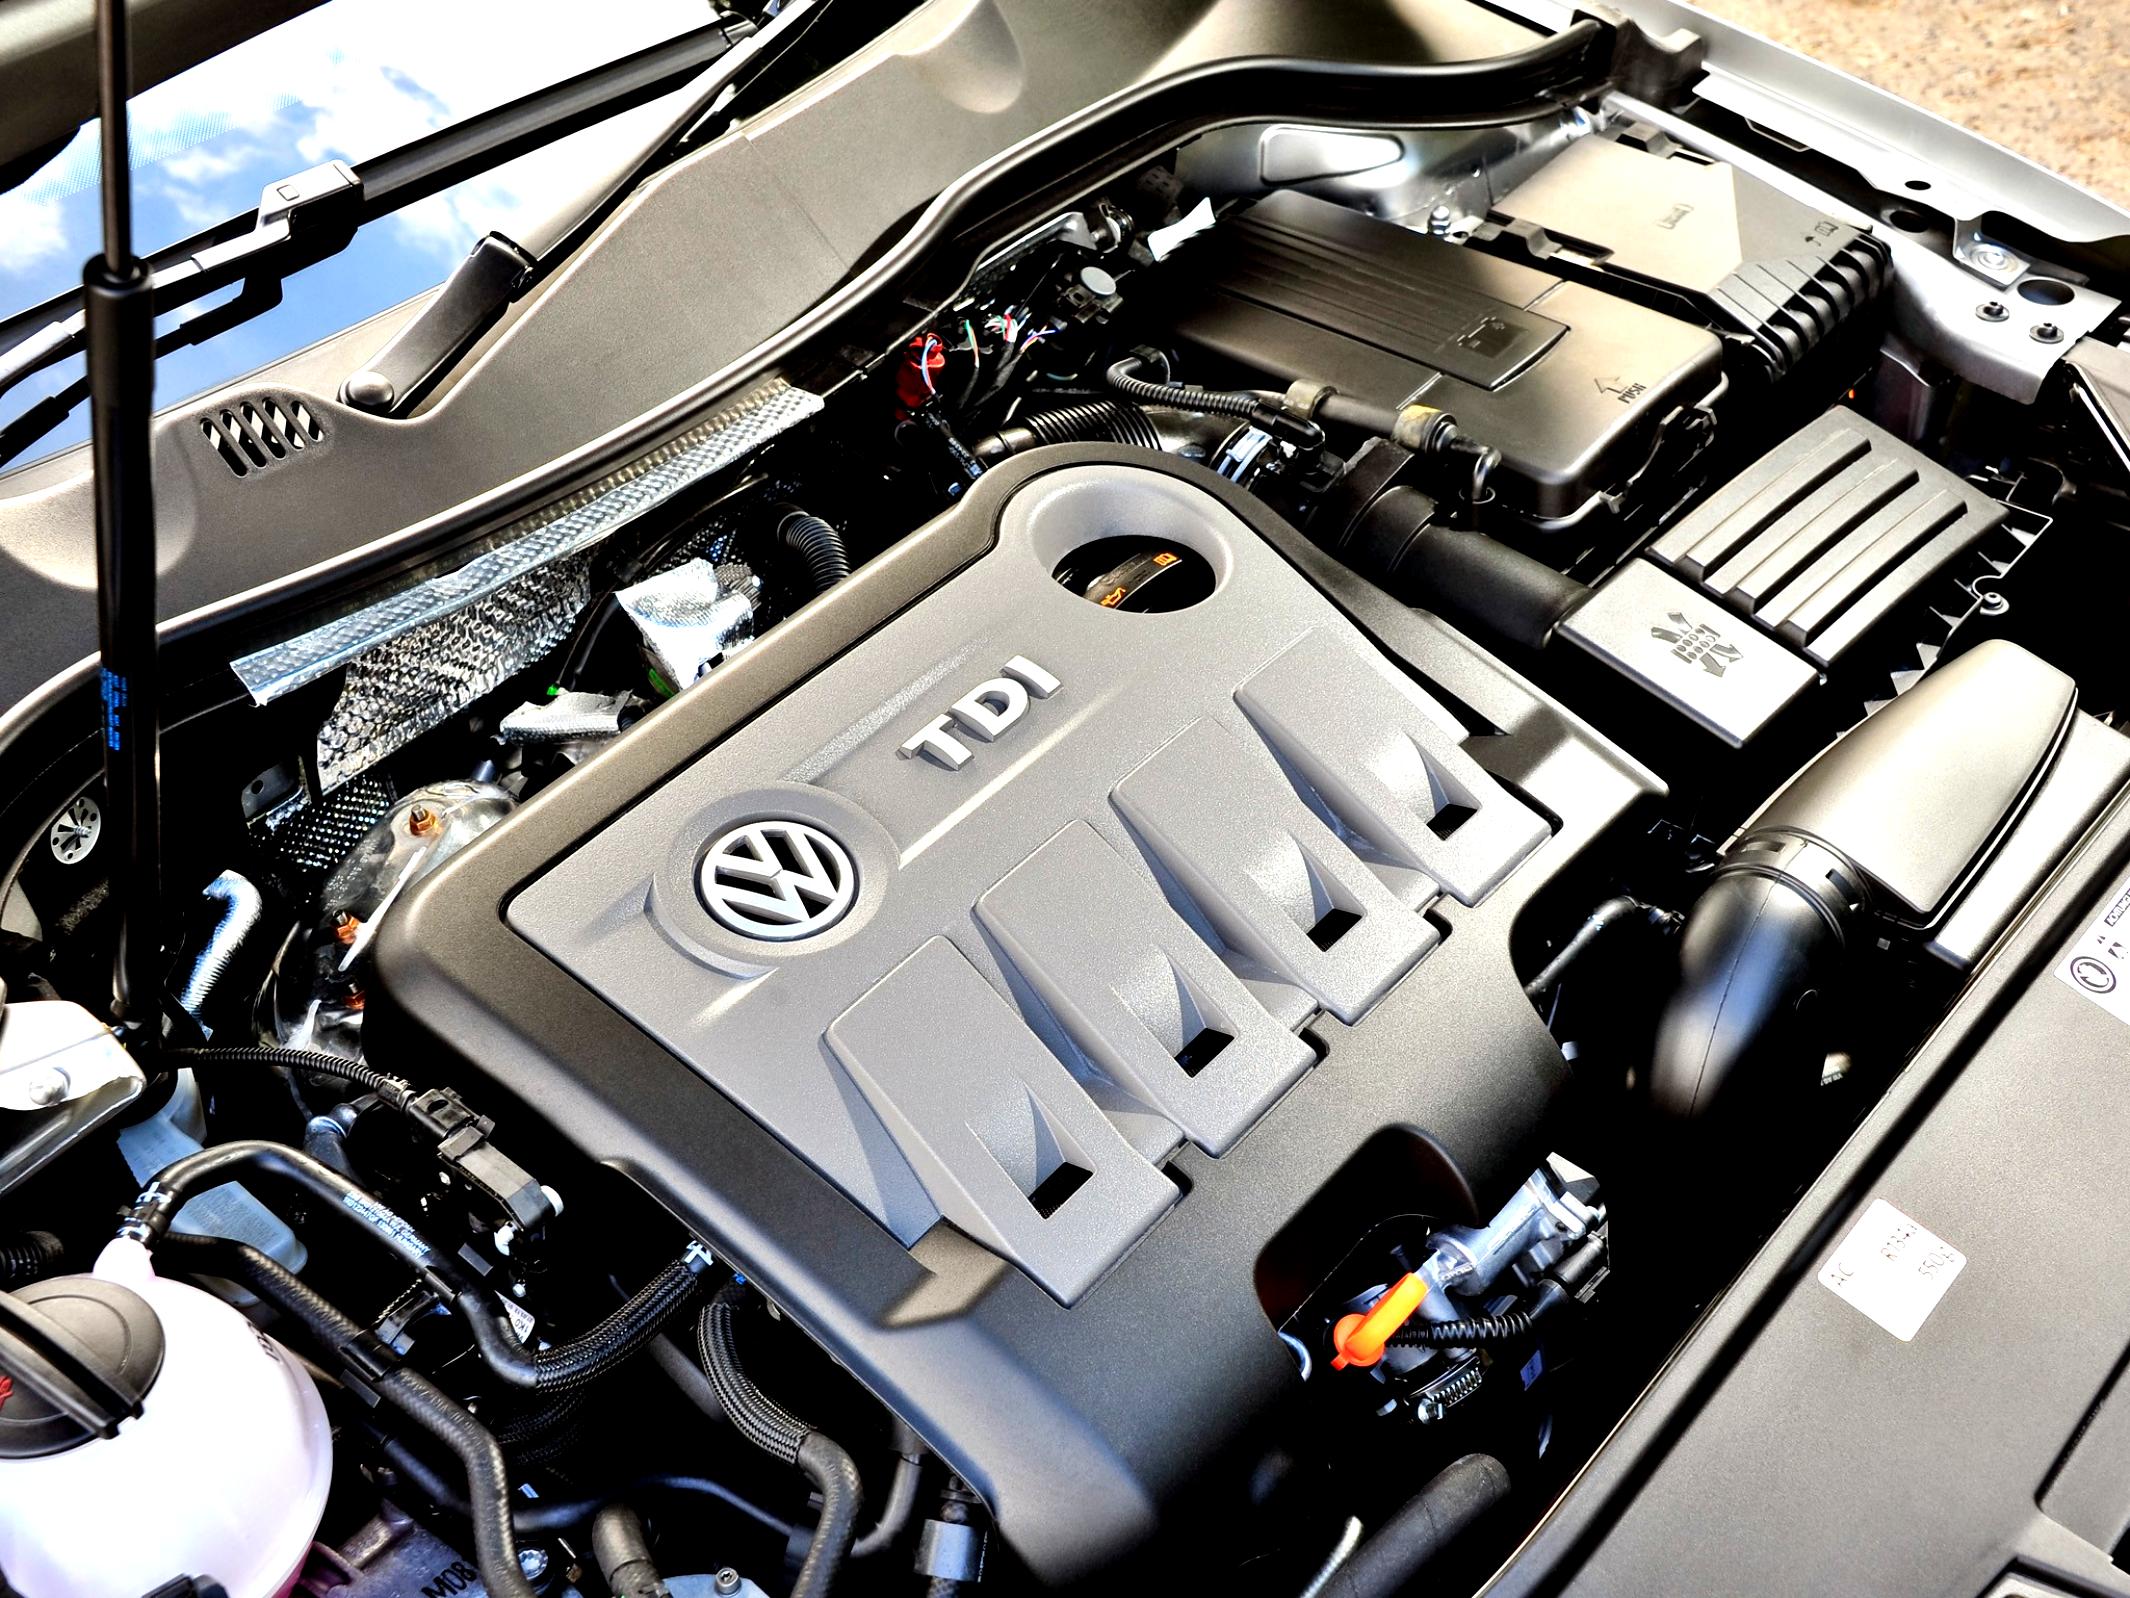 Двигатель б фольксваген дизель. Фольксваген Пассат б7 двигатель. Двигатель Volkswagen Passat b7. Пассат б6 2.0 дизель. Двигатель Volkswagen Passat СС 2.0 TDI.